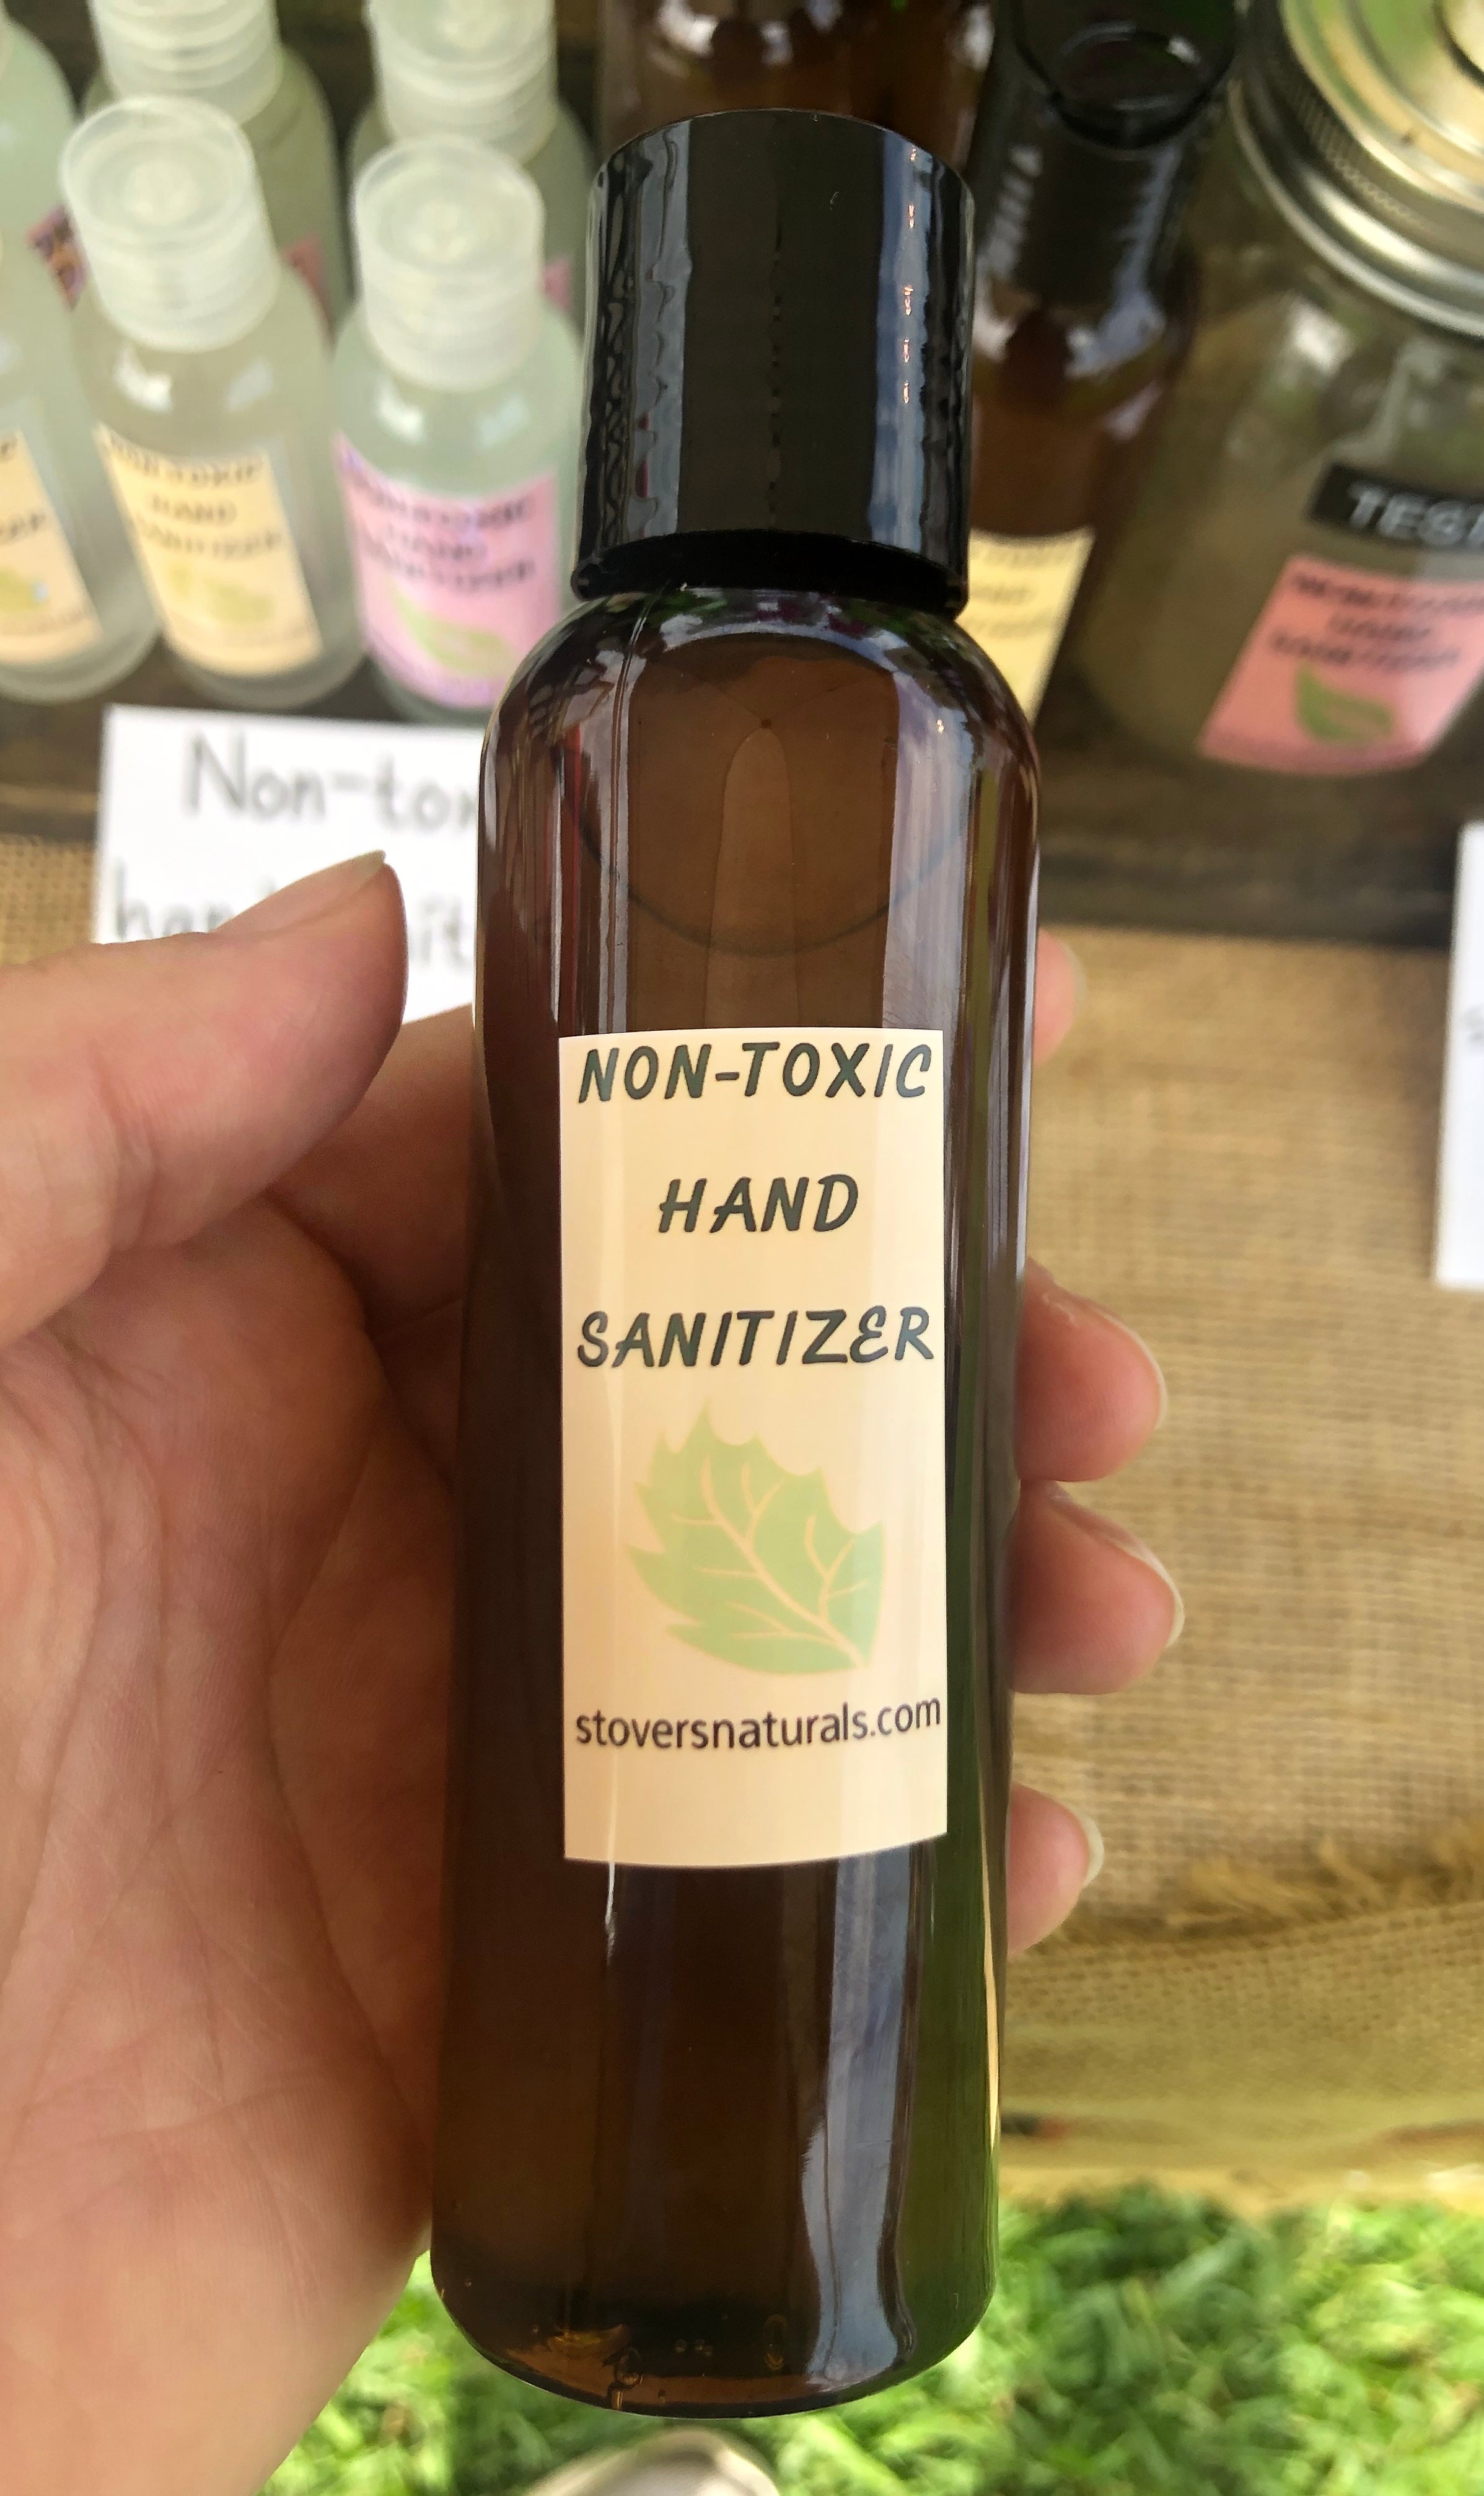 Non-toxic hand sanitizer